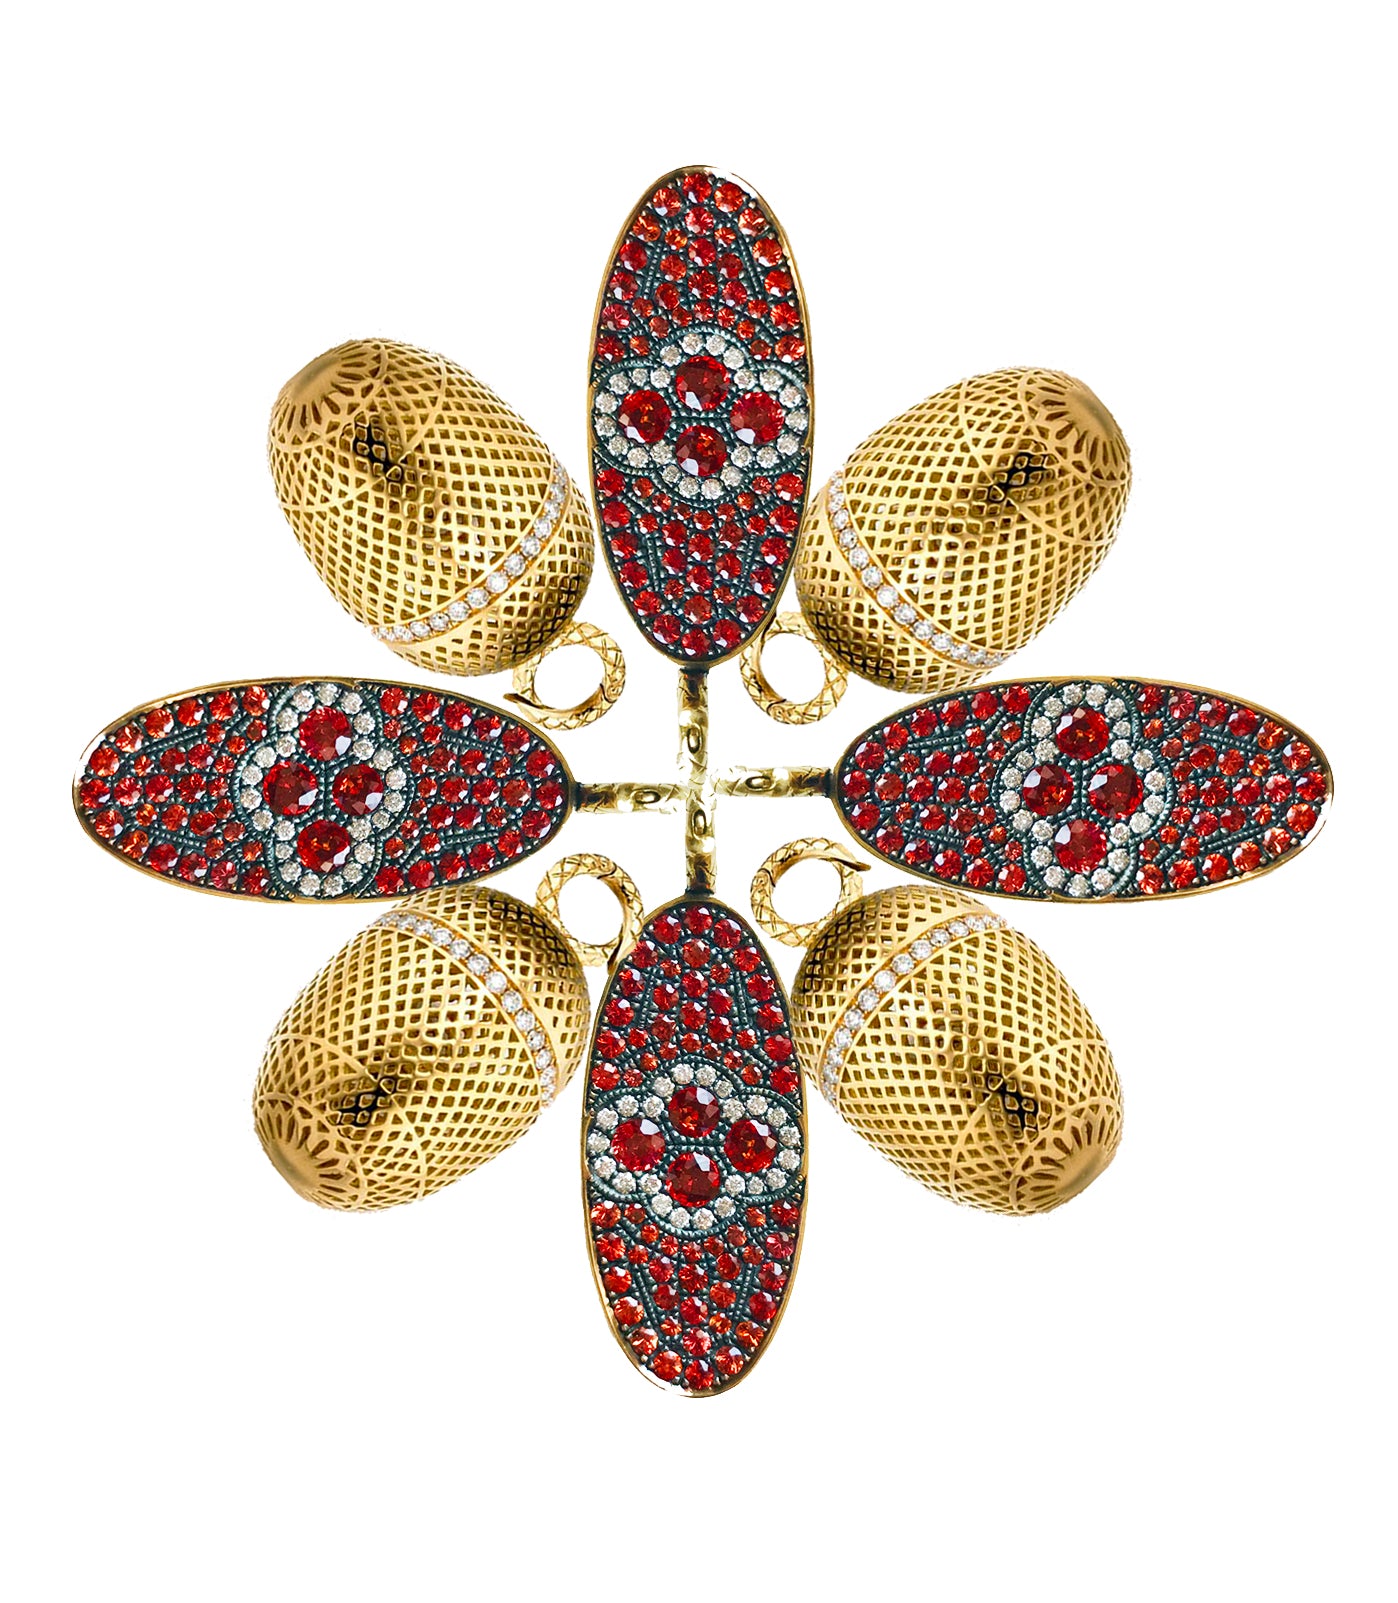 Ottoman-Empire-Inspired-Jewelry-Image-2